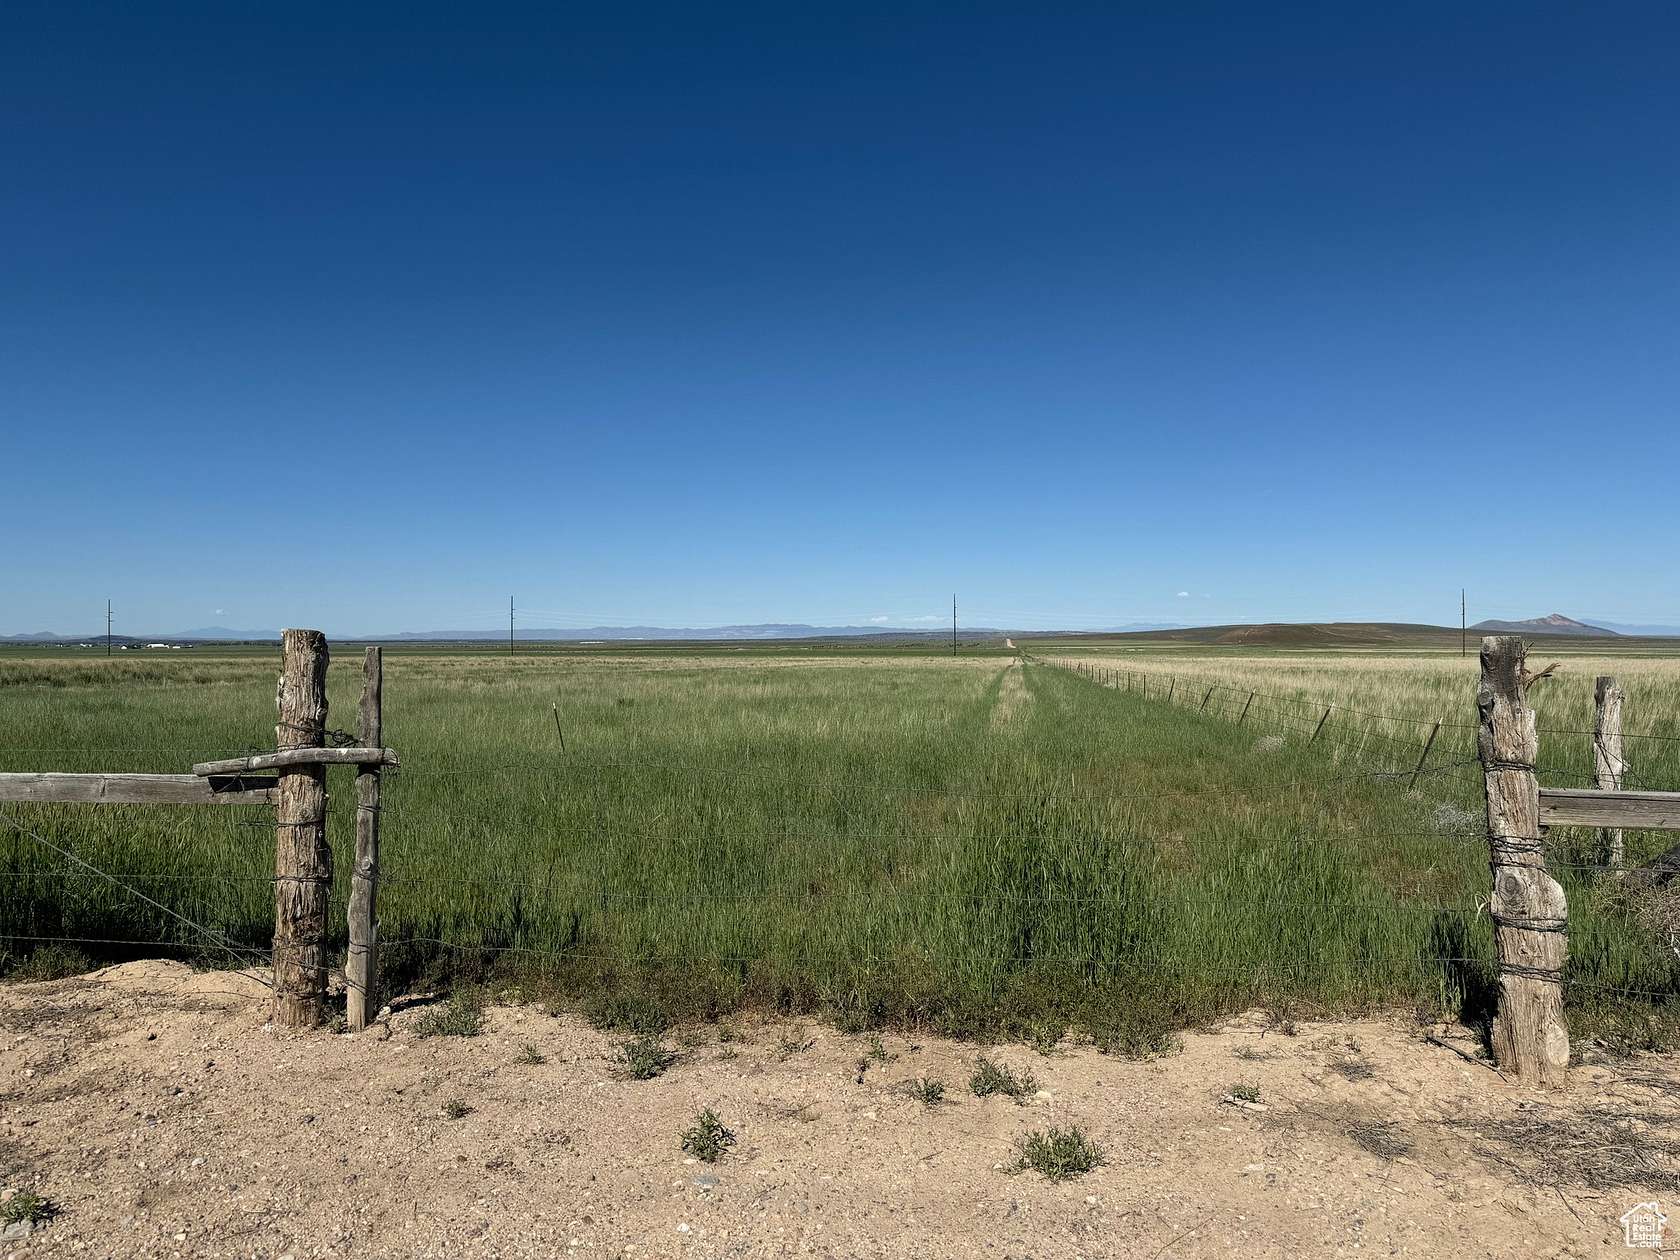 684 Acres of Agricultural Land for Sale in Fillmore, Utah